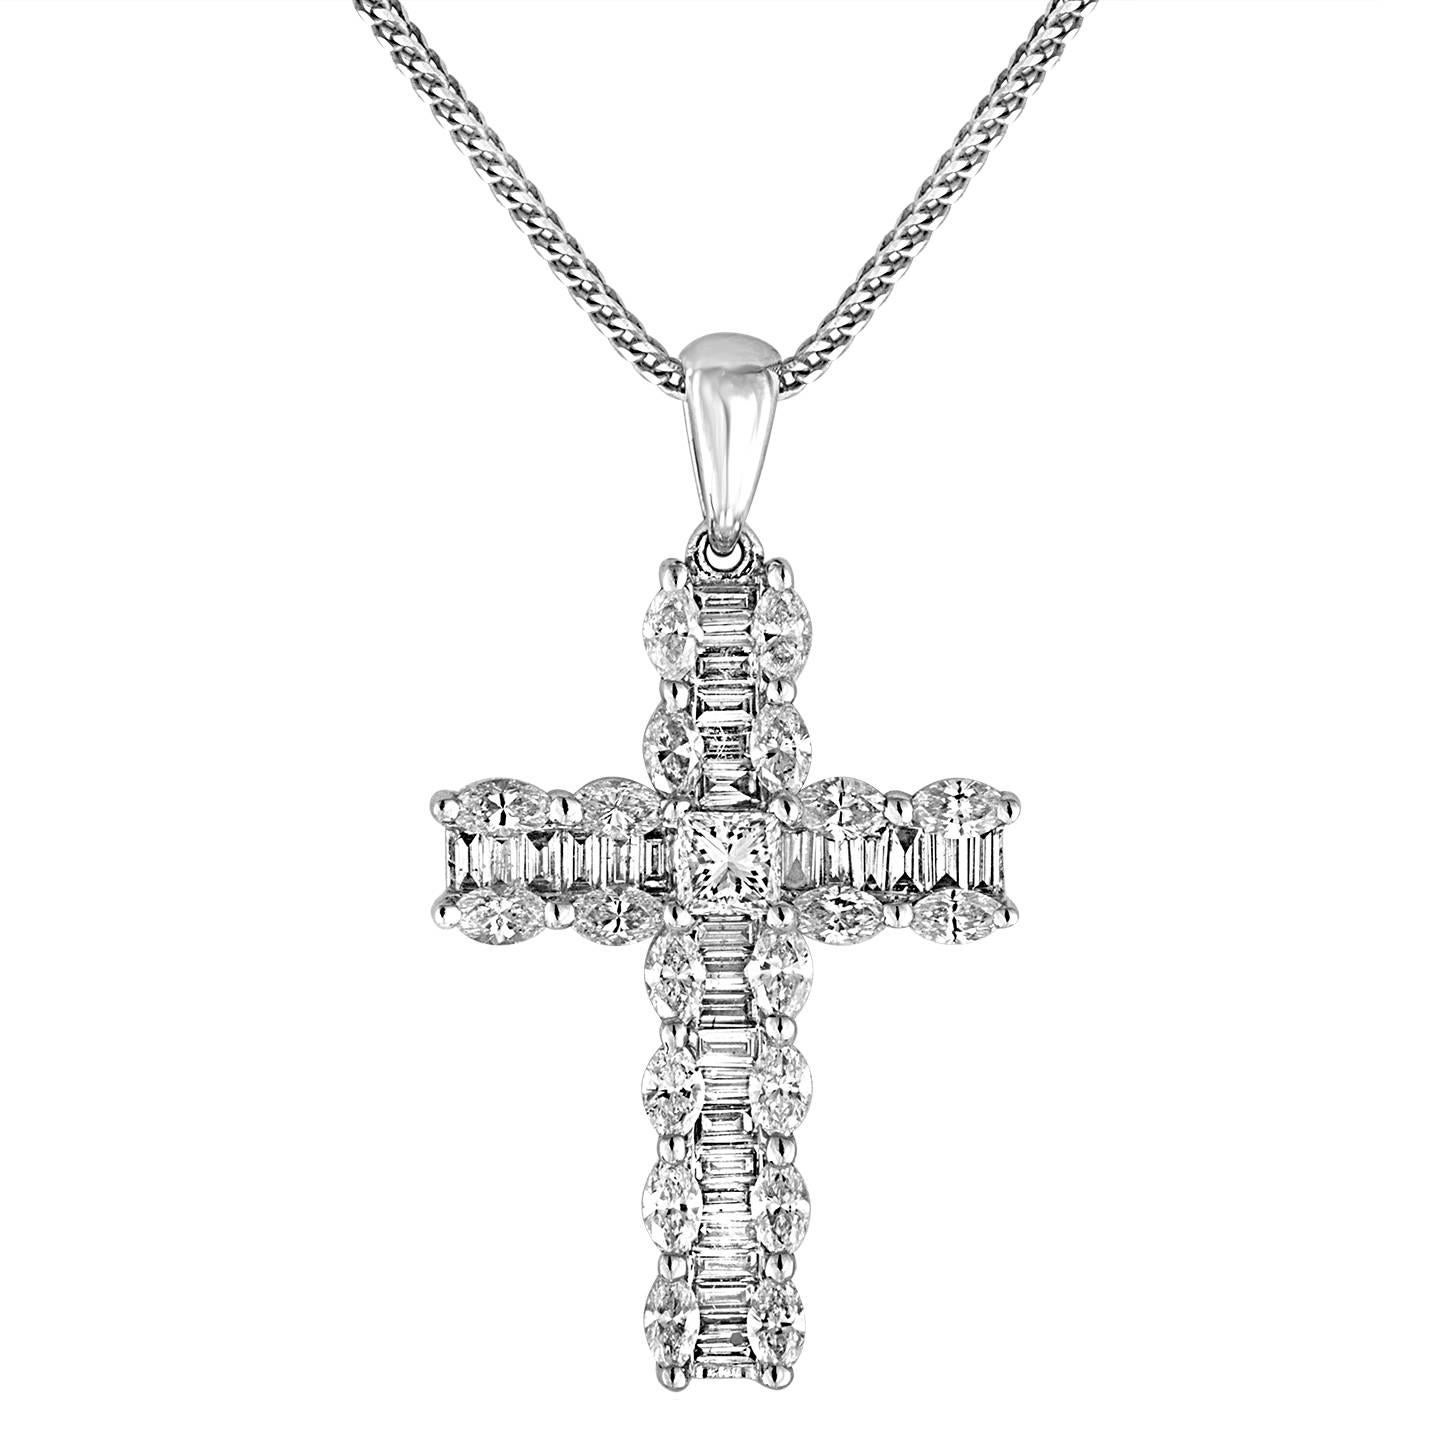 1.46 Carats Diamond Gold Cross Pendant Chain Necklace